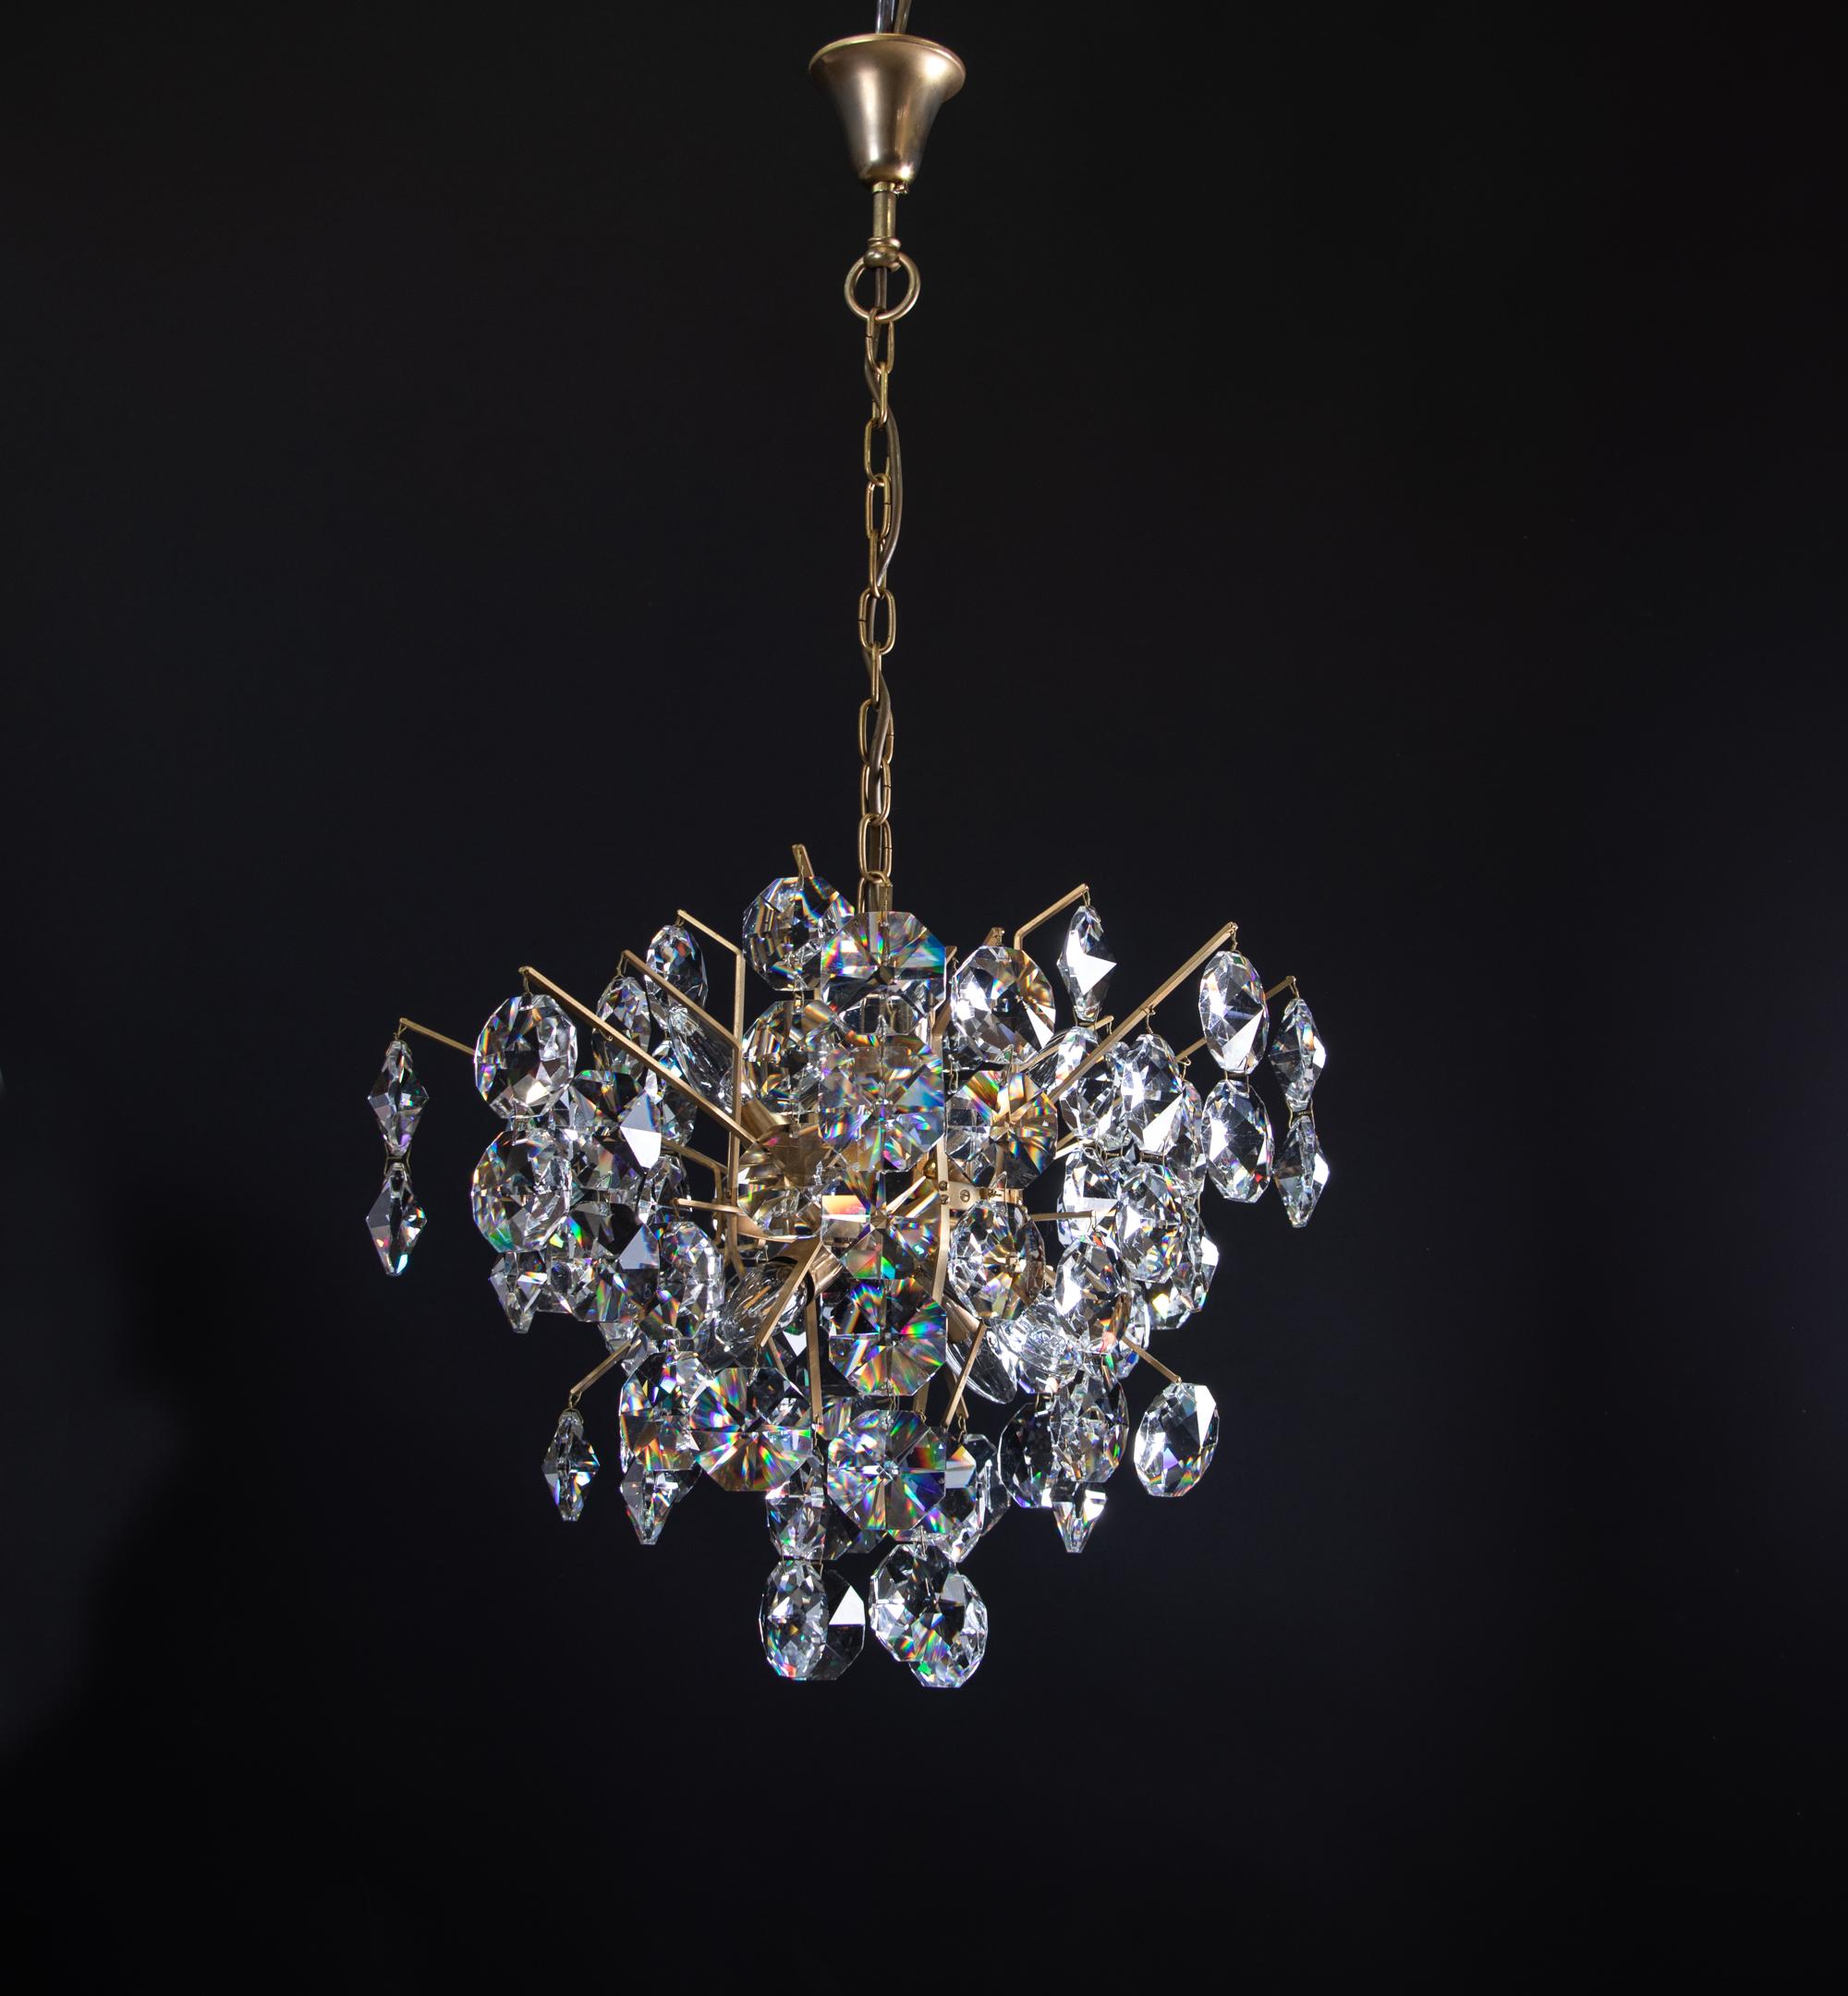 Hollywood Regency 1960 Germany Palwa Sputnik Chandelier Swarovski Crystal & Gilt Brass